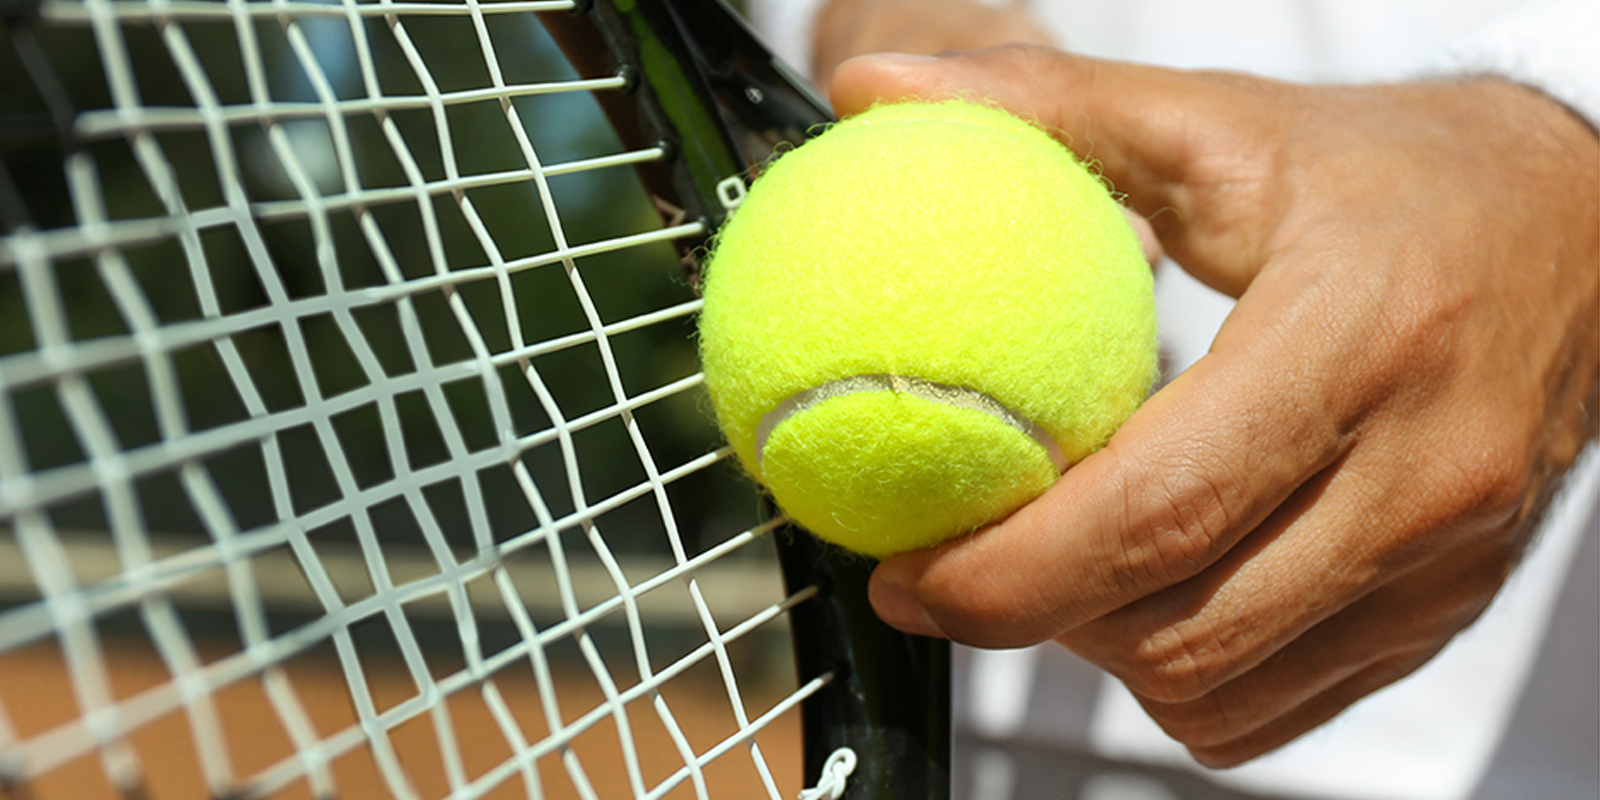 Racket Sports Proven to Increase Longevity